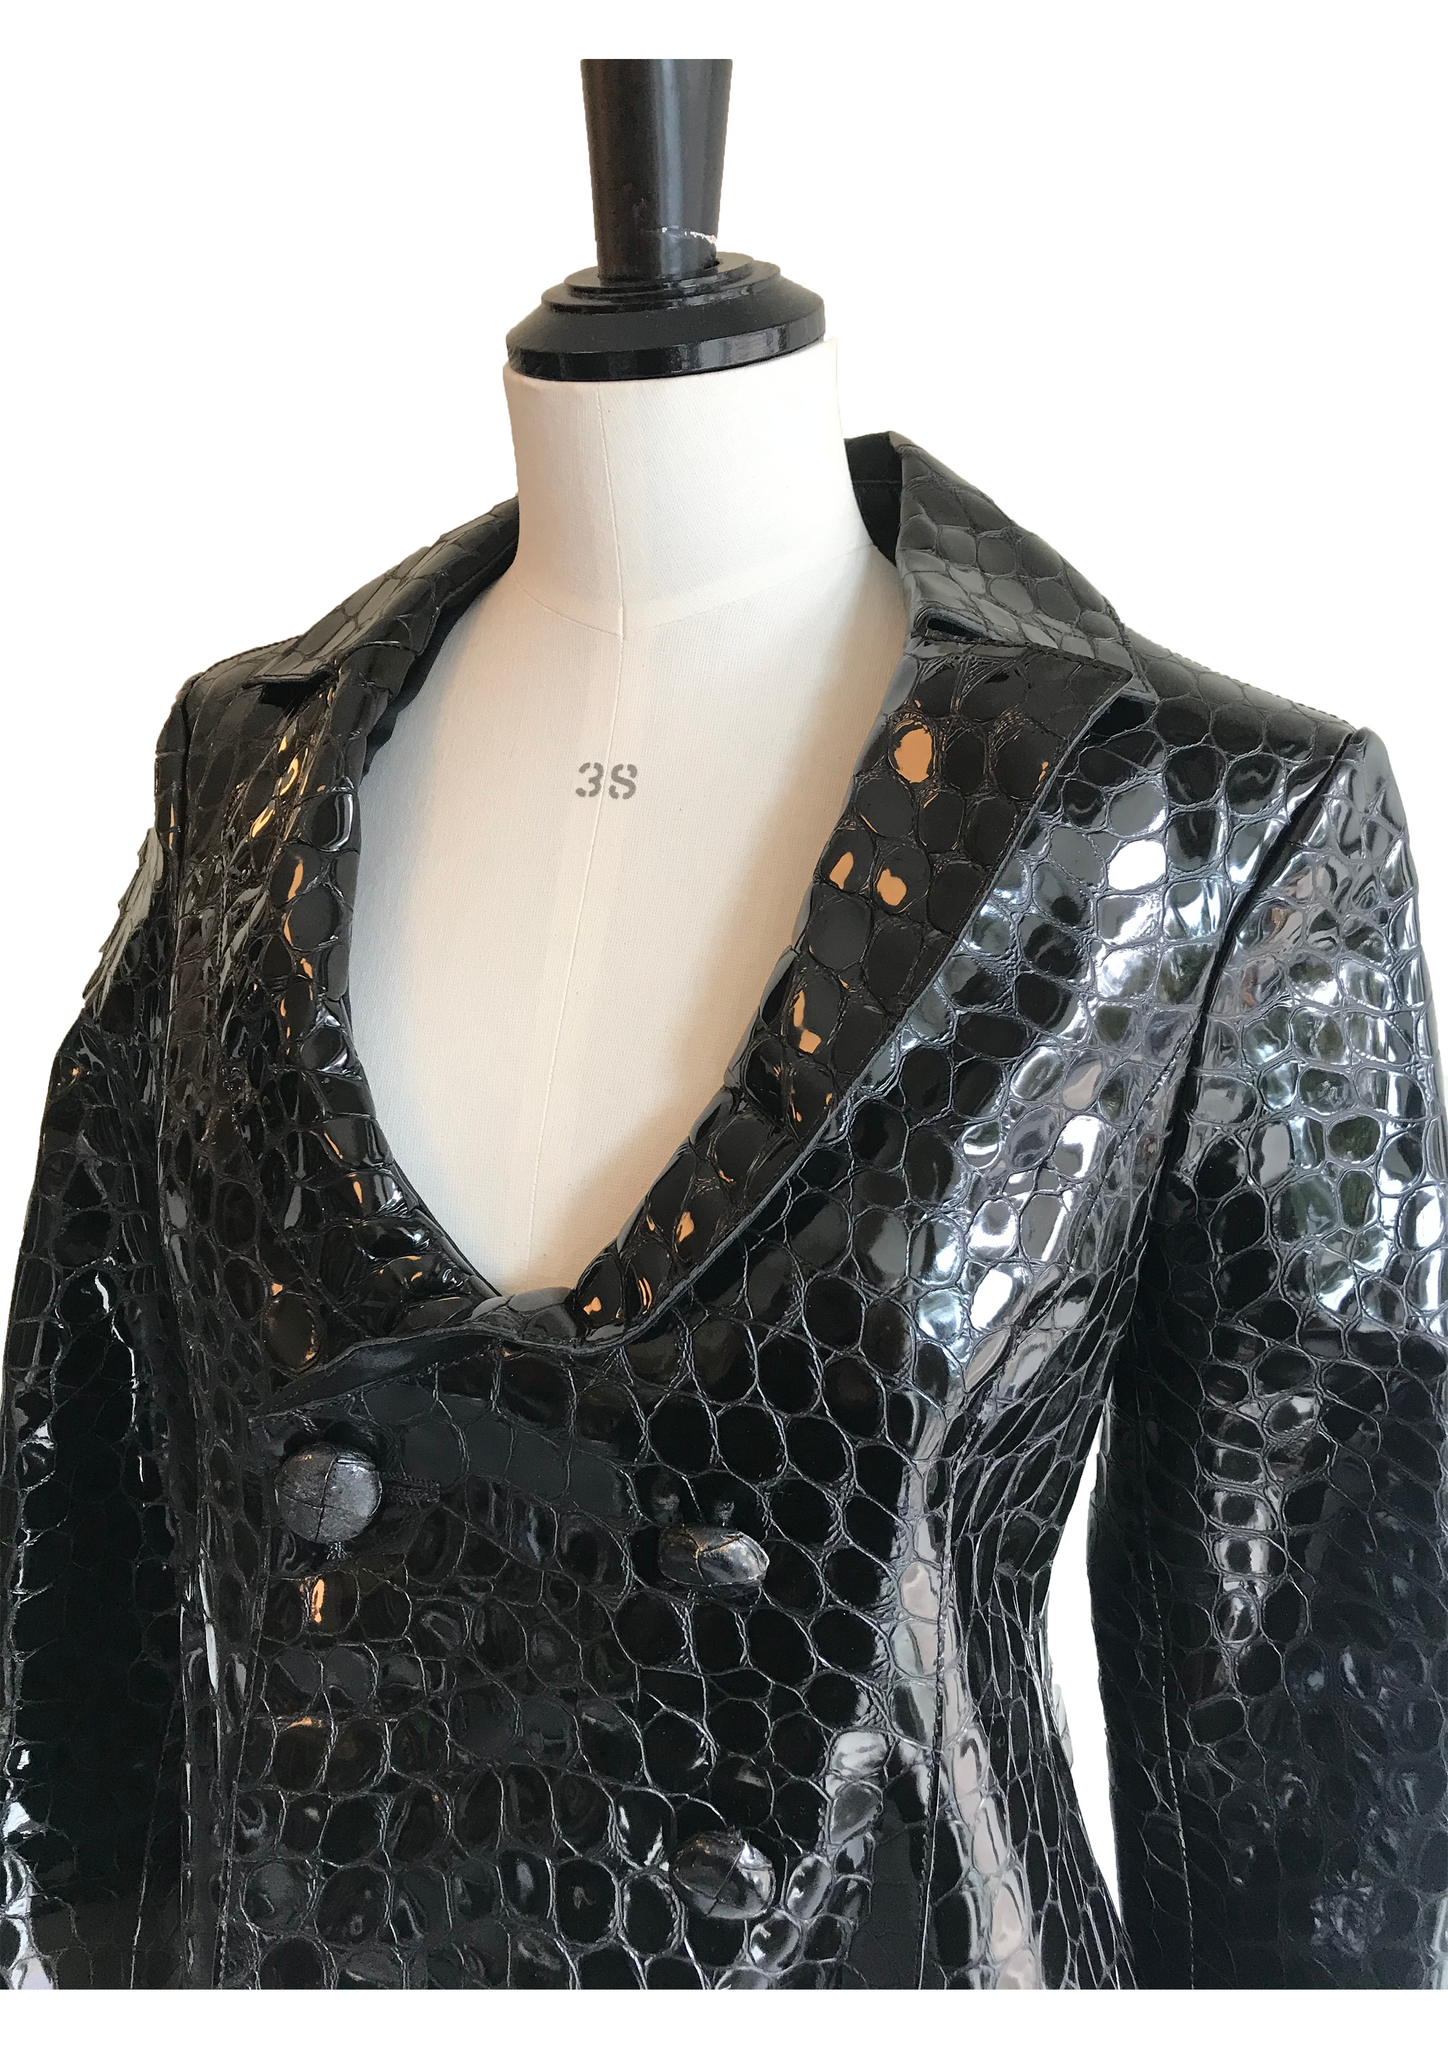 Isabella's Wardrobe Emporio Armani Croc Textured Patent Leather Jacket.